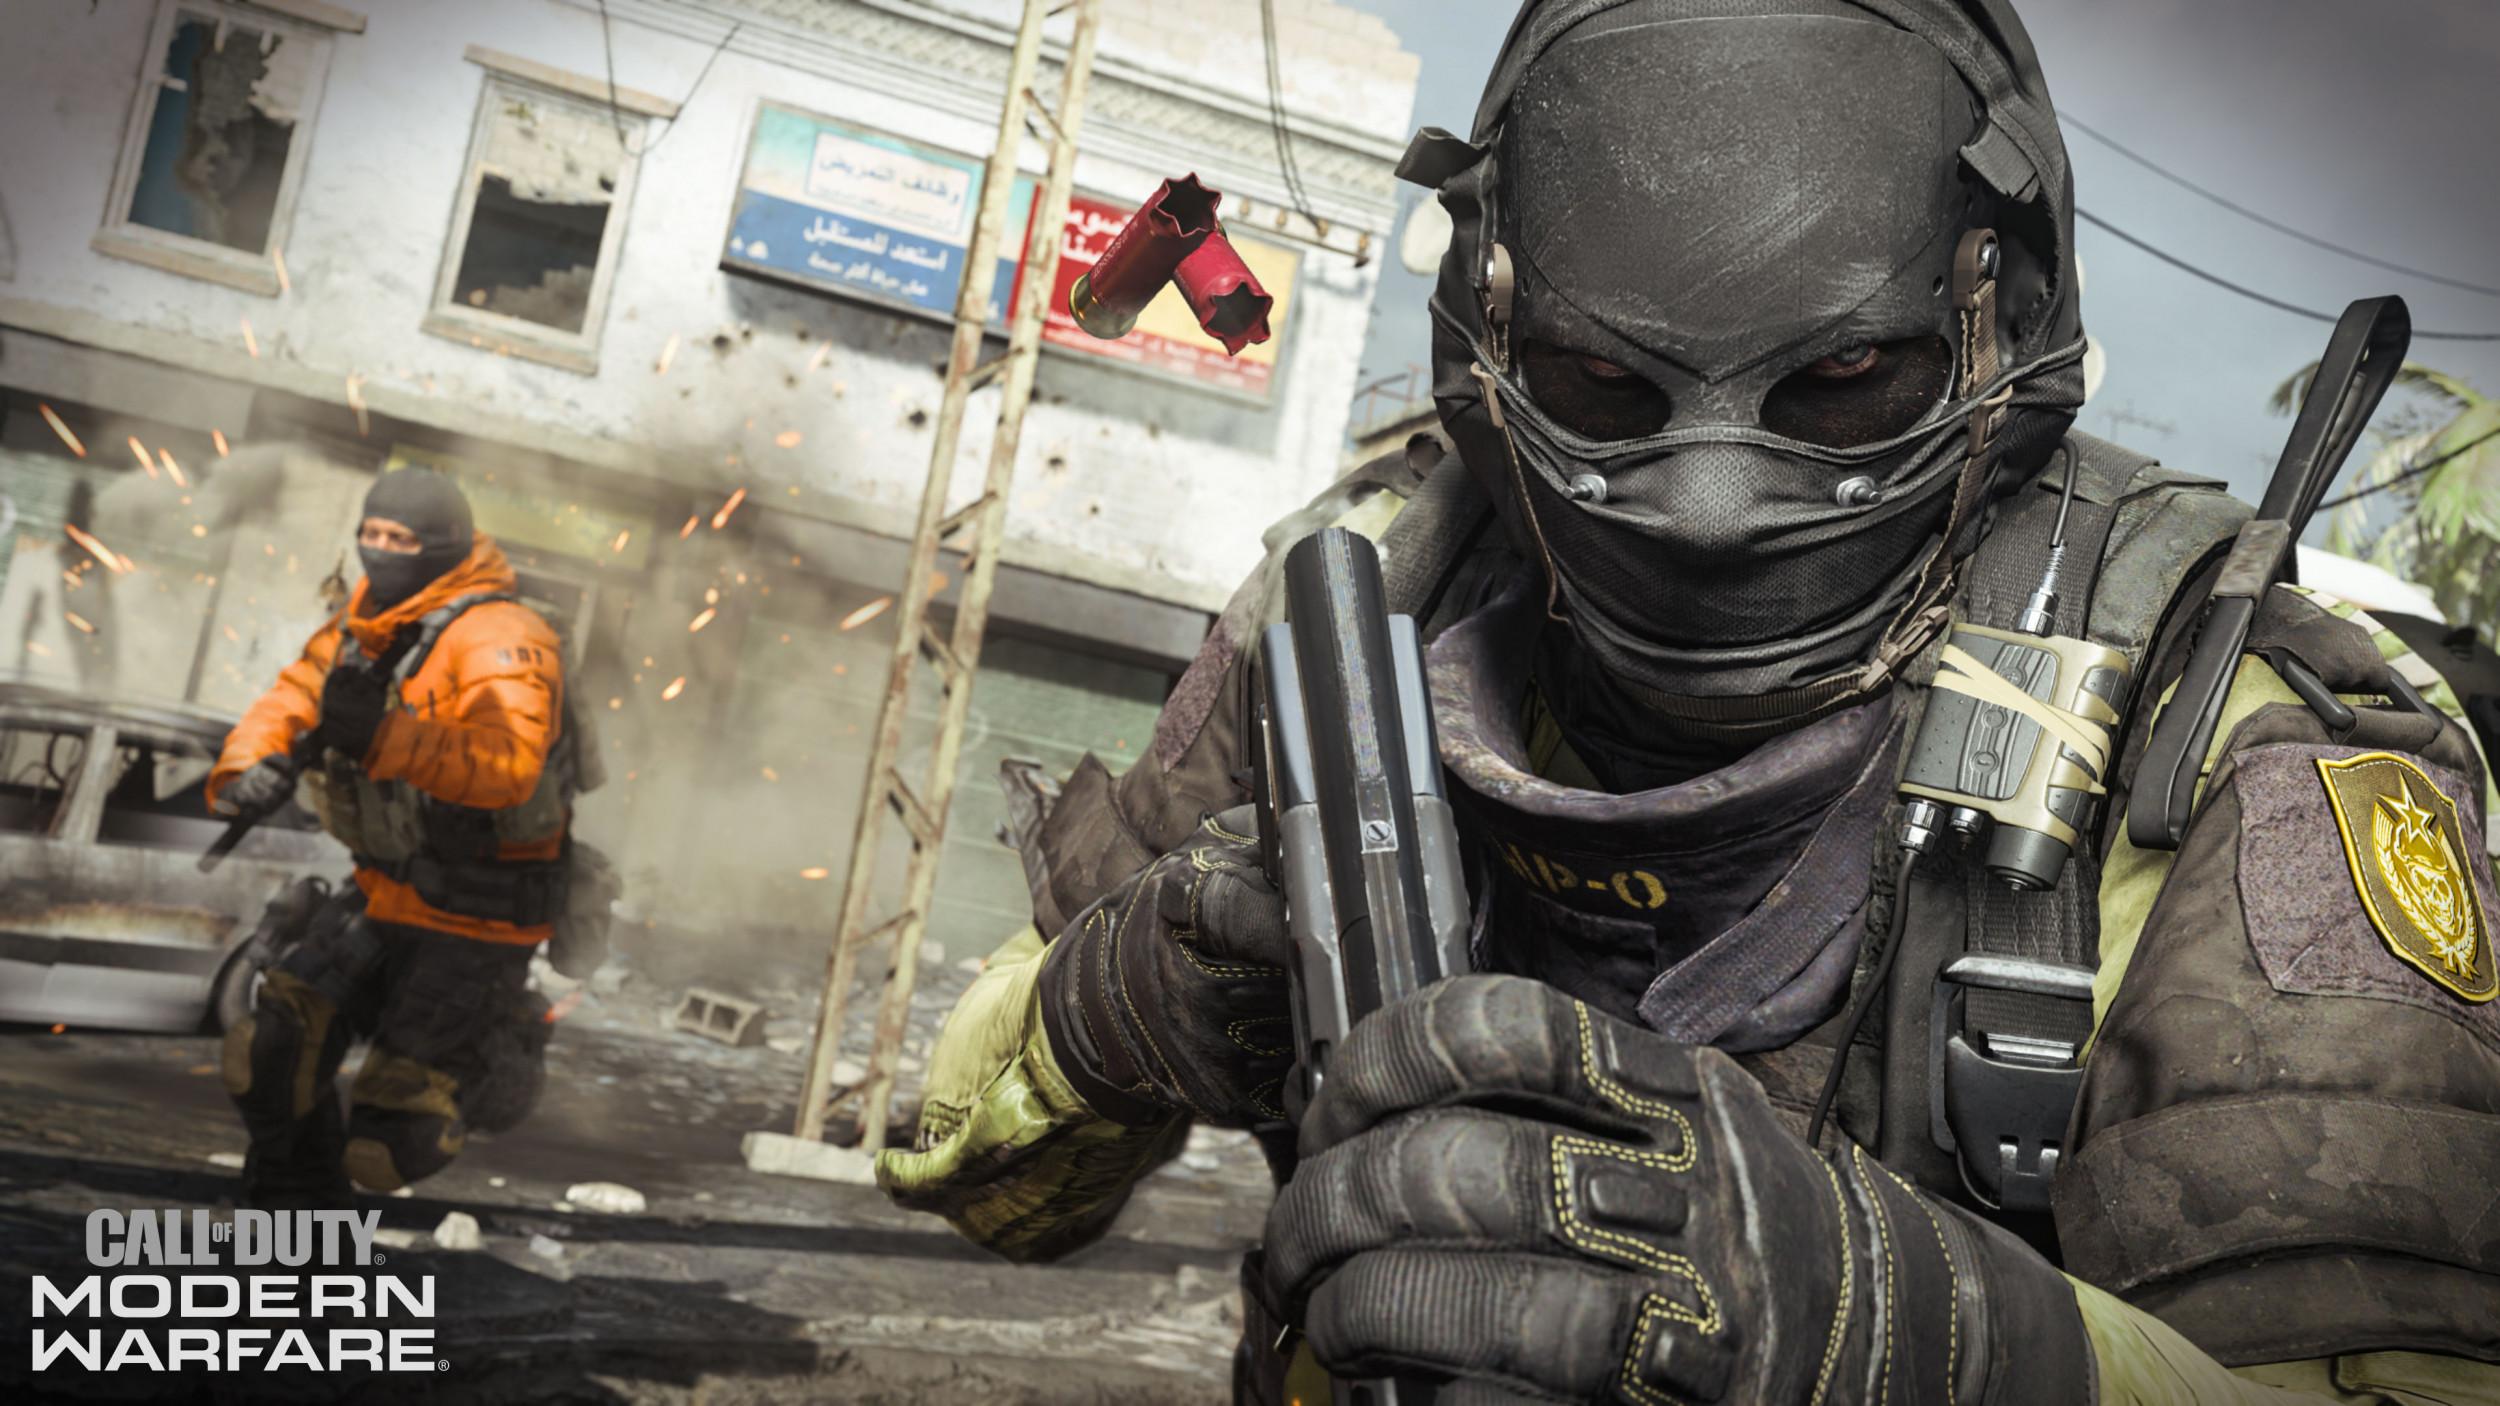 Call of Duty: Modern Warfare' Update 1.13 Releases Next Week